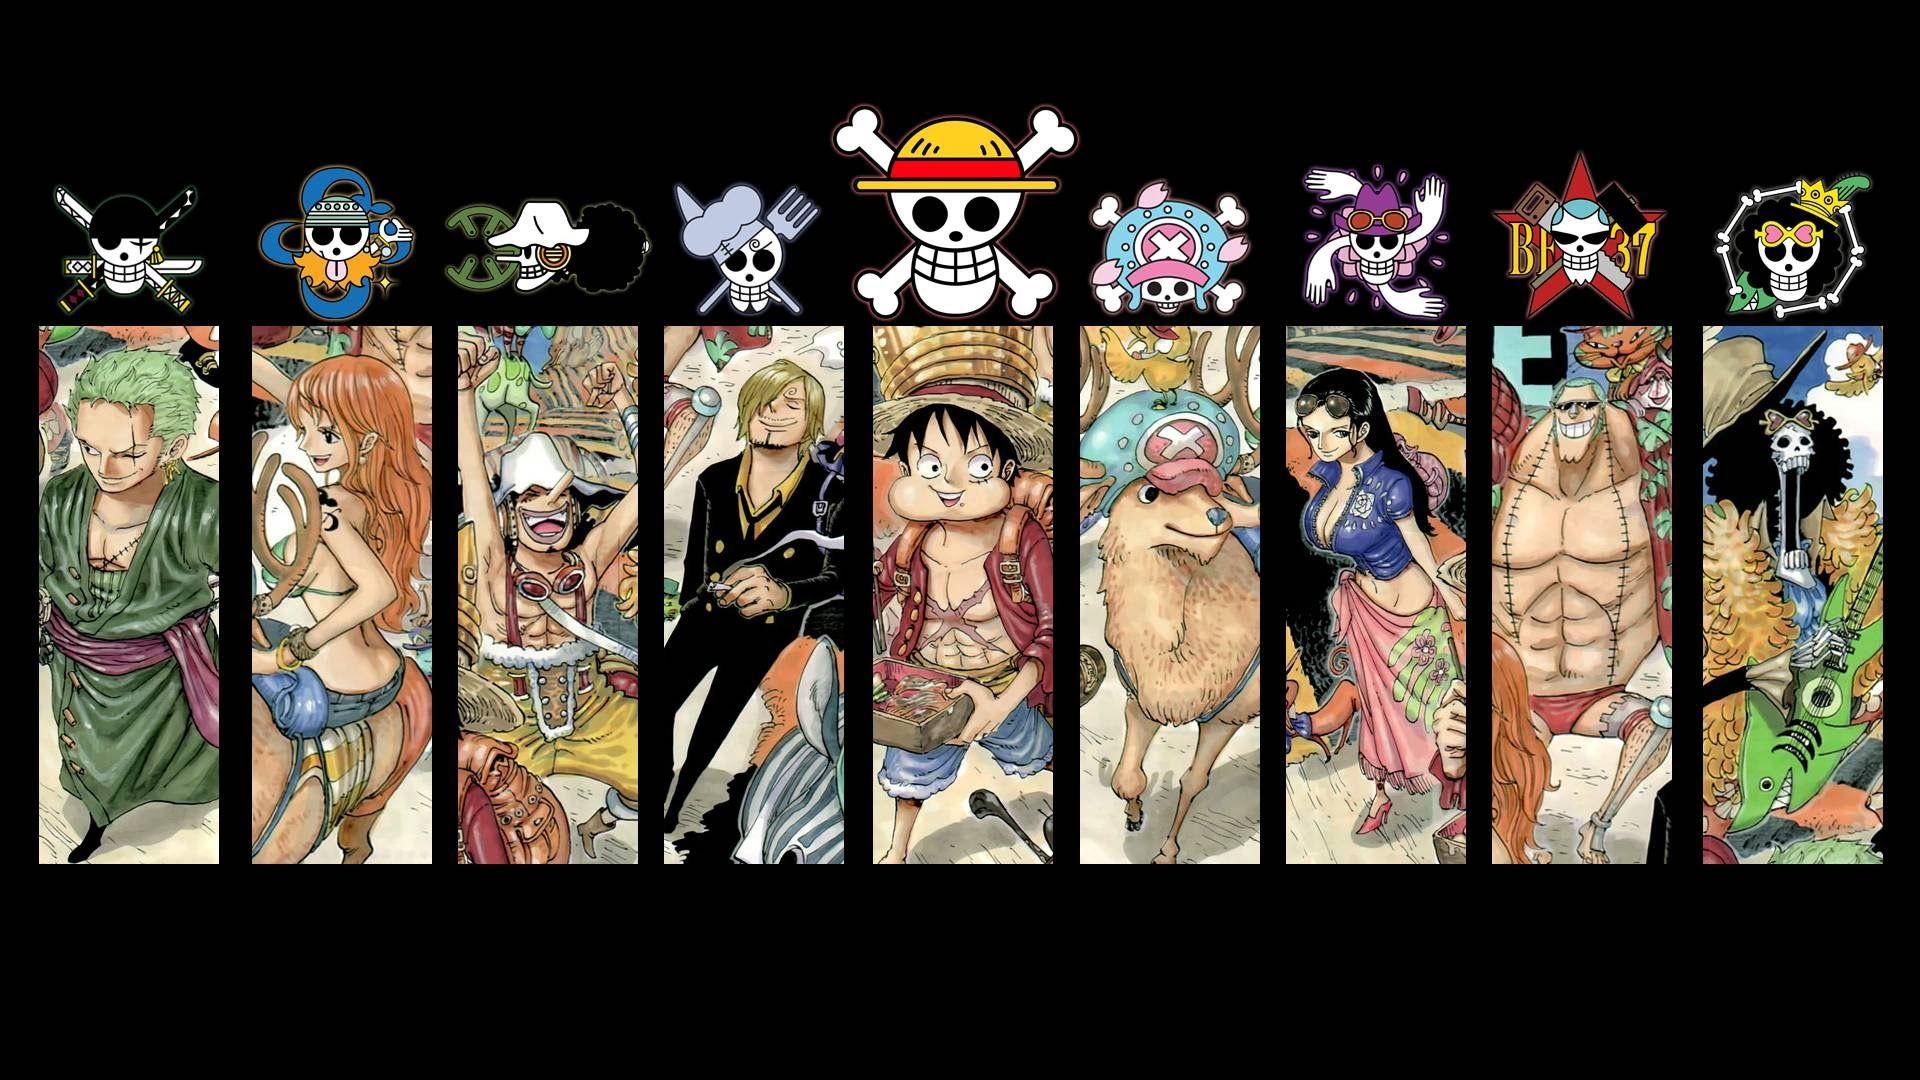 Ver] One Piece: Stampede Pelicula Completa Latino [2019